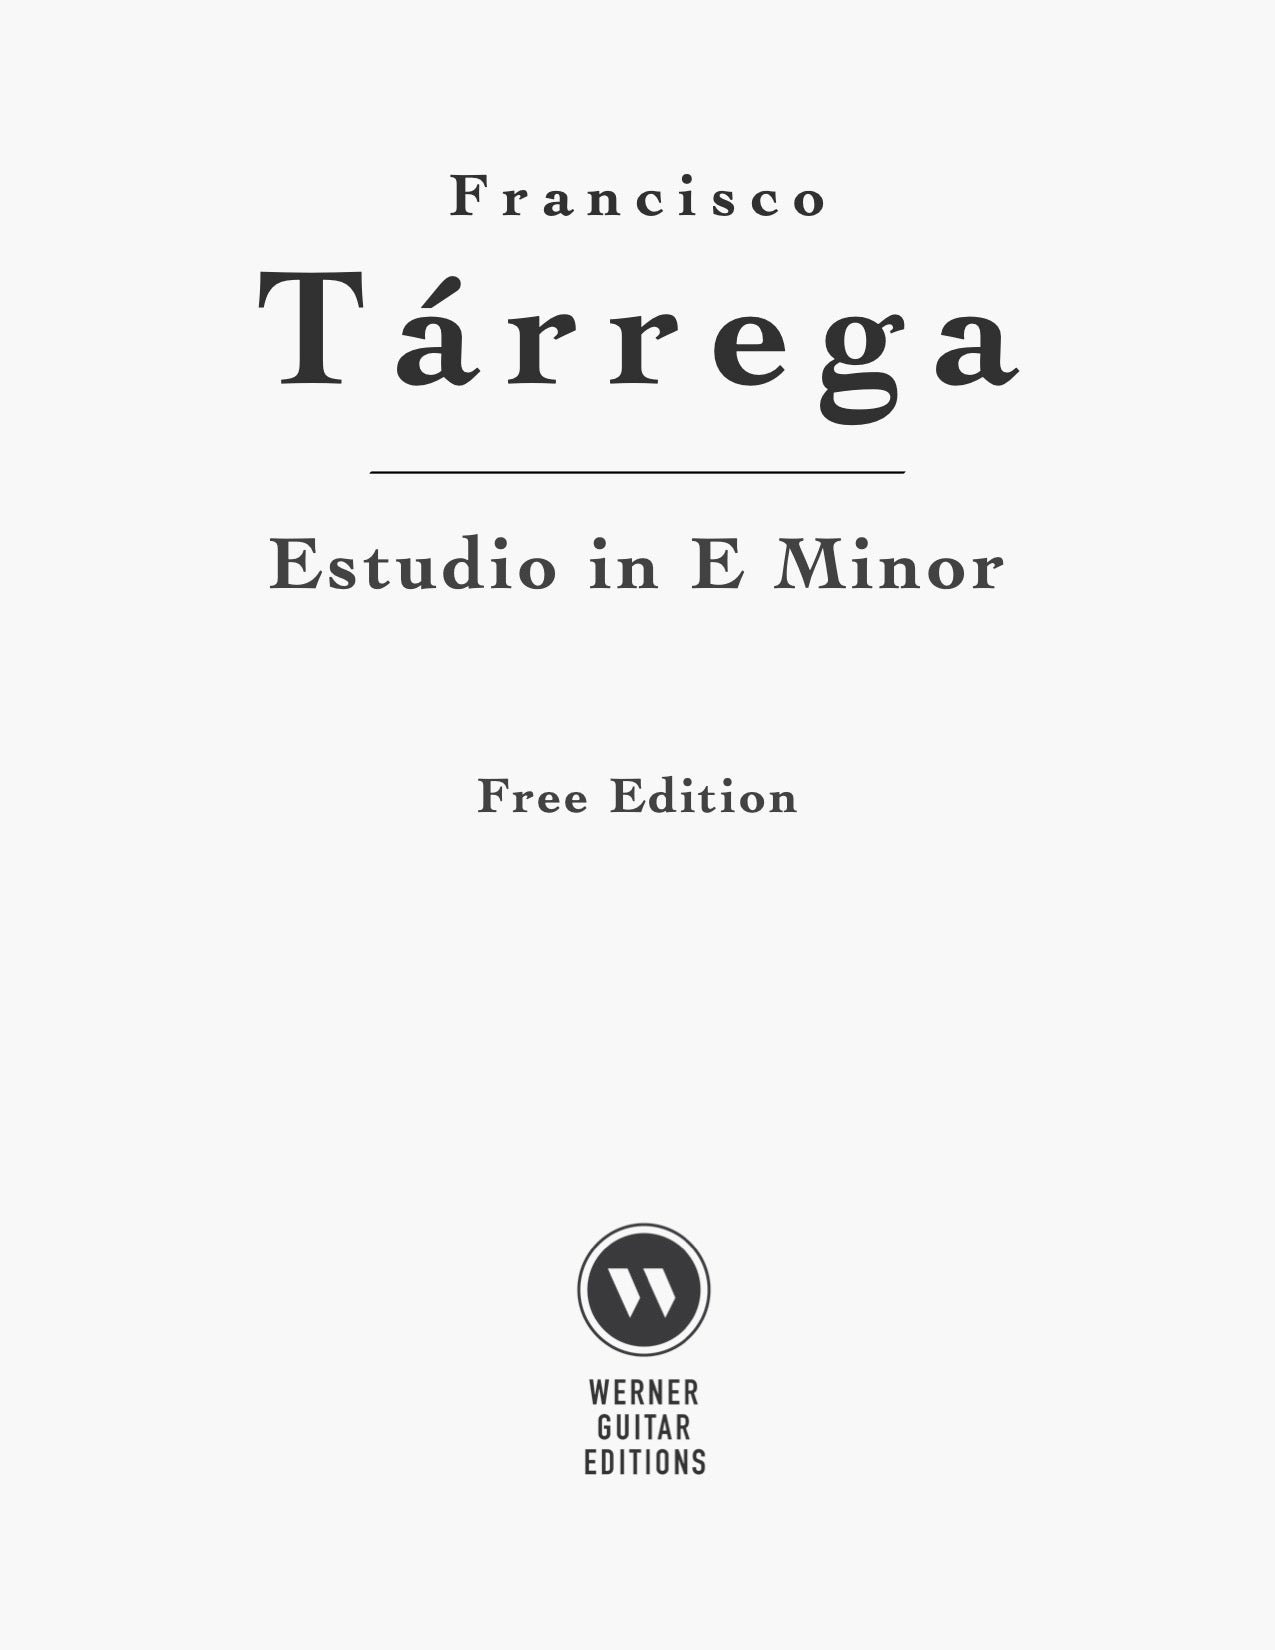 Estudio by Tarrega for Classical Guitar (Free PDF)